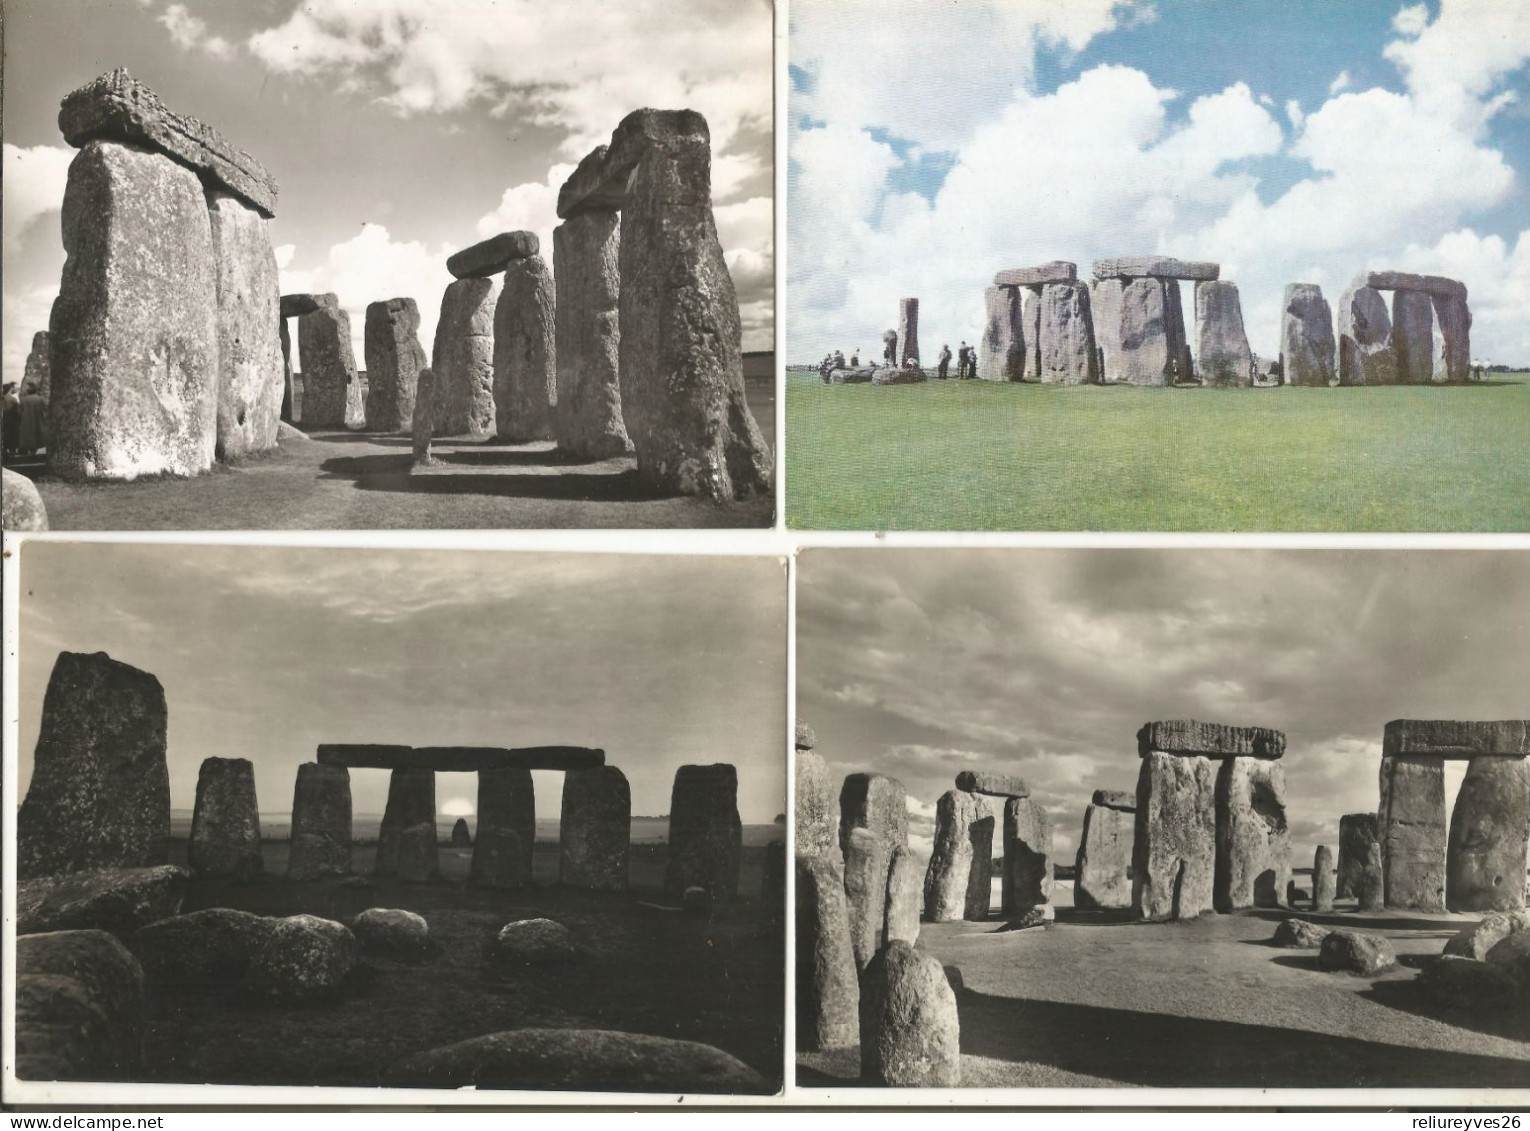 CPM, G. F. R.U.  Lot De 5 Cartes De Stonehenge , Ed. Ministry Of Works - Stonehenge